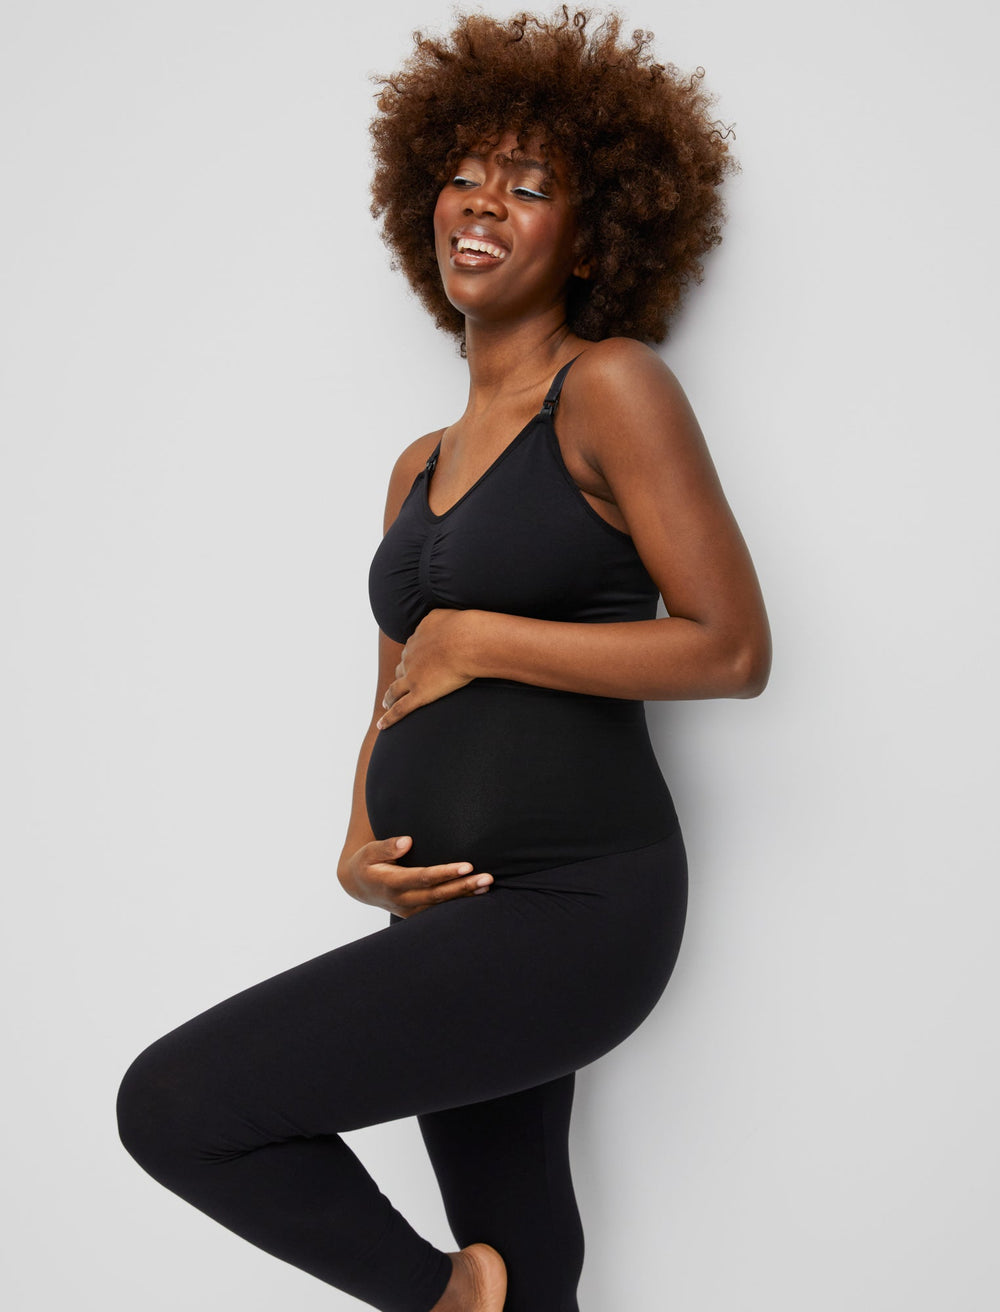  Womens Maternity Leggings Over The Belly Pregnancy